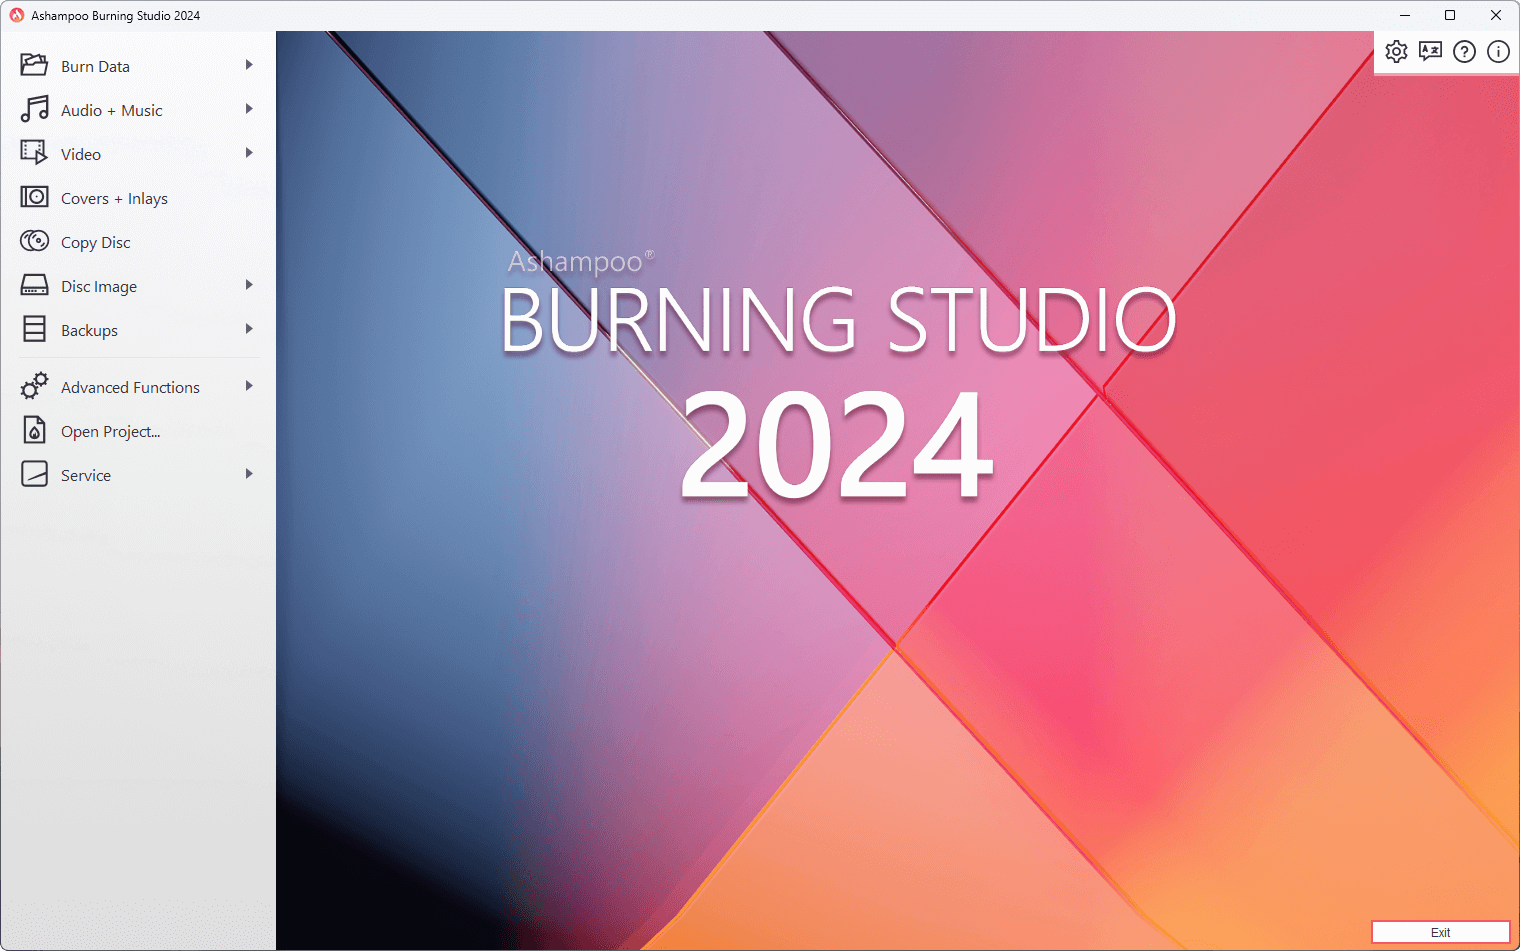 [Image: scr_ashampoo_burning_studio_2024_home_en.png]